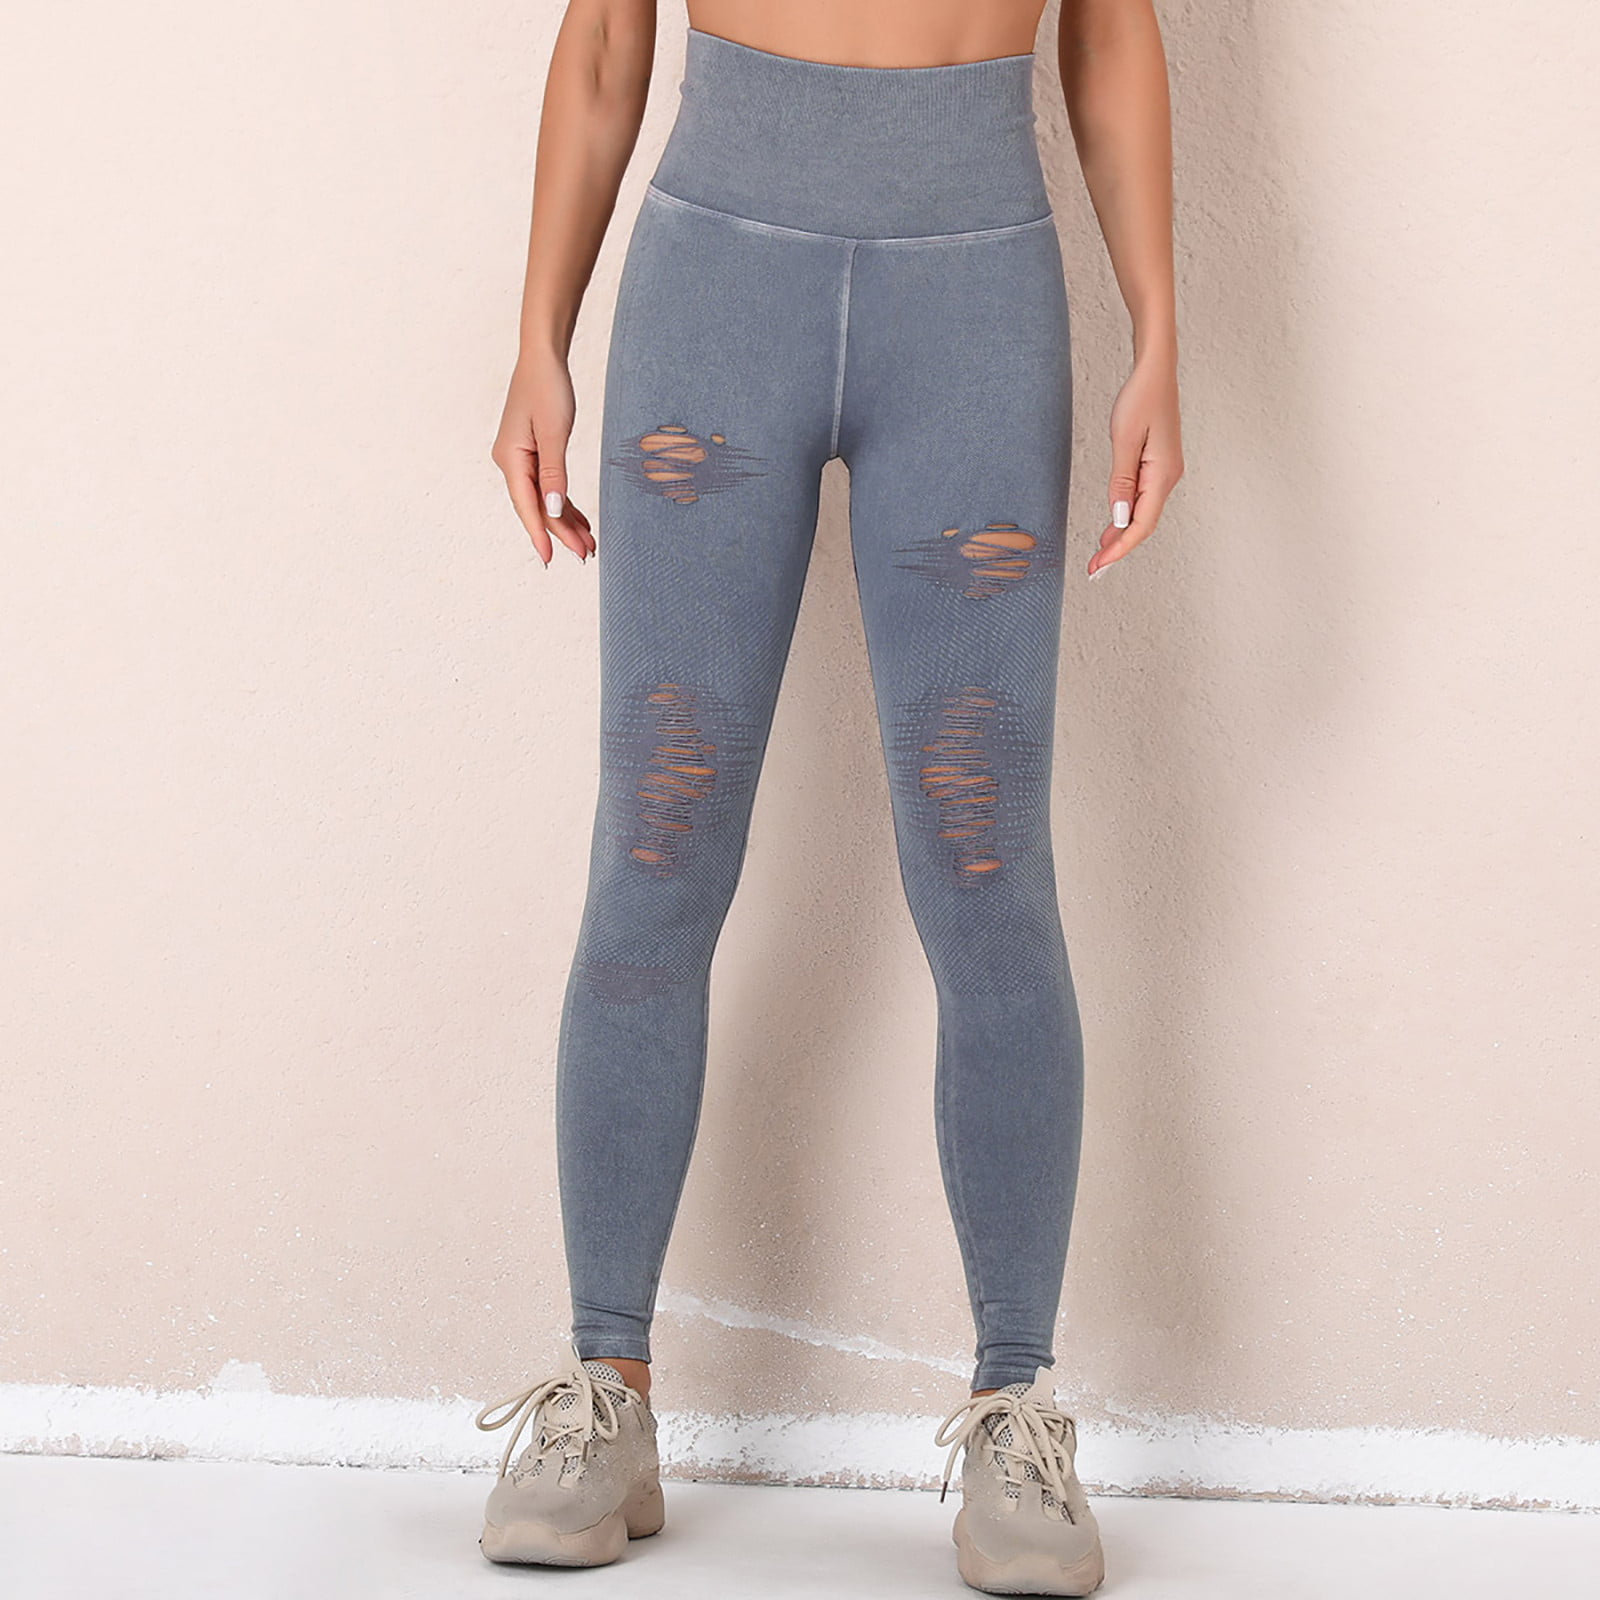 Gubotare Yoga Pants For Women Bootcut Women's Plus Size